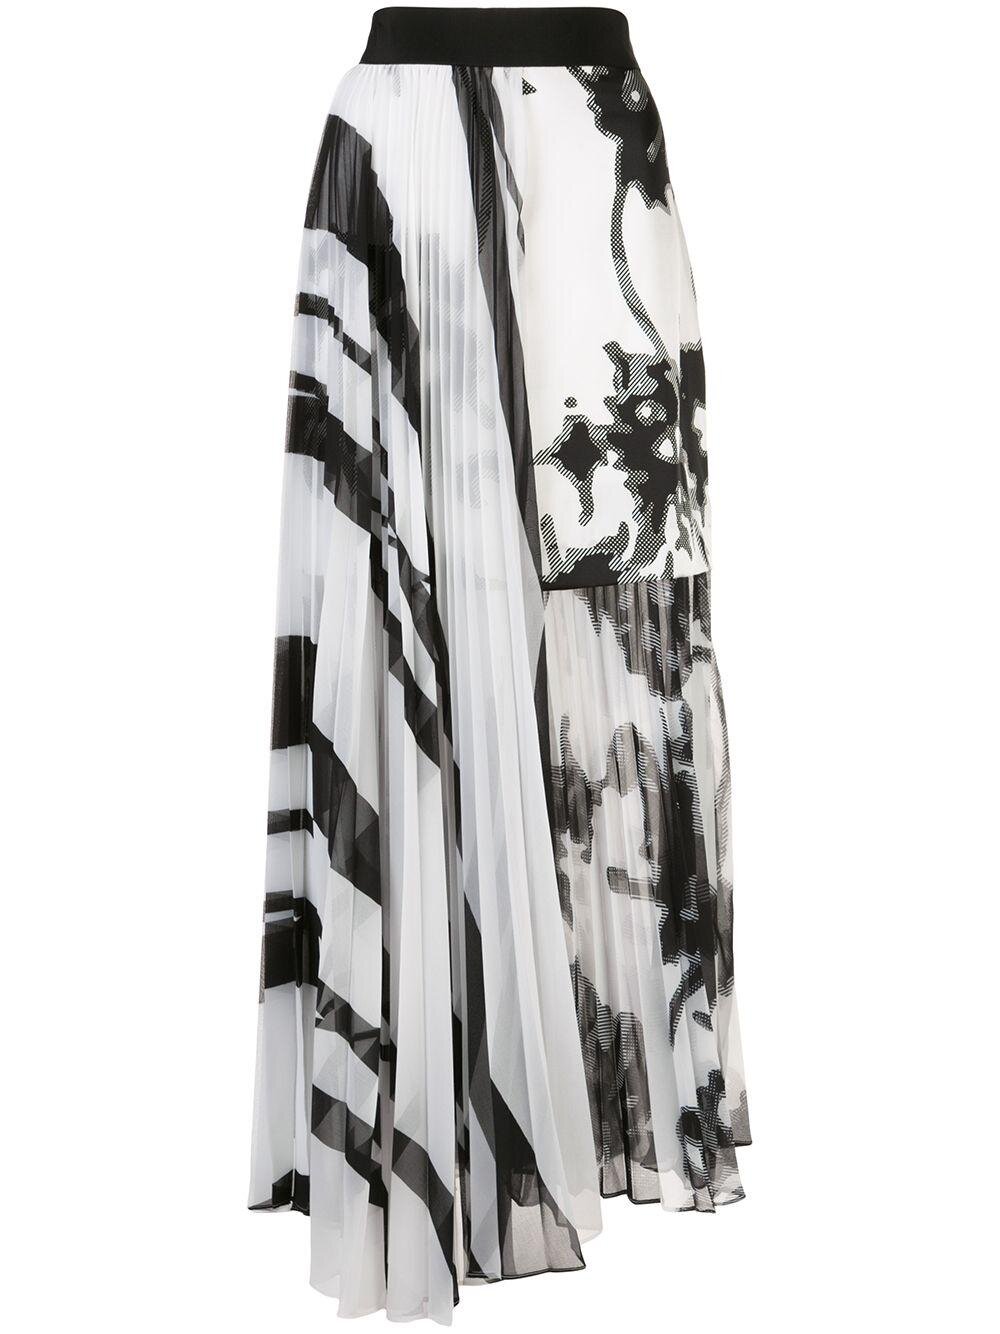 Silvia Tcherassi Gaelle Skirt in Stripe.jpg